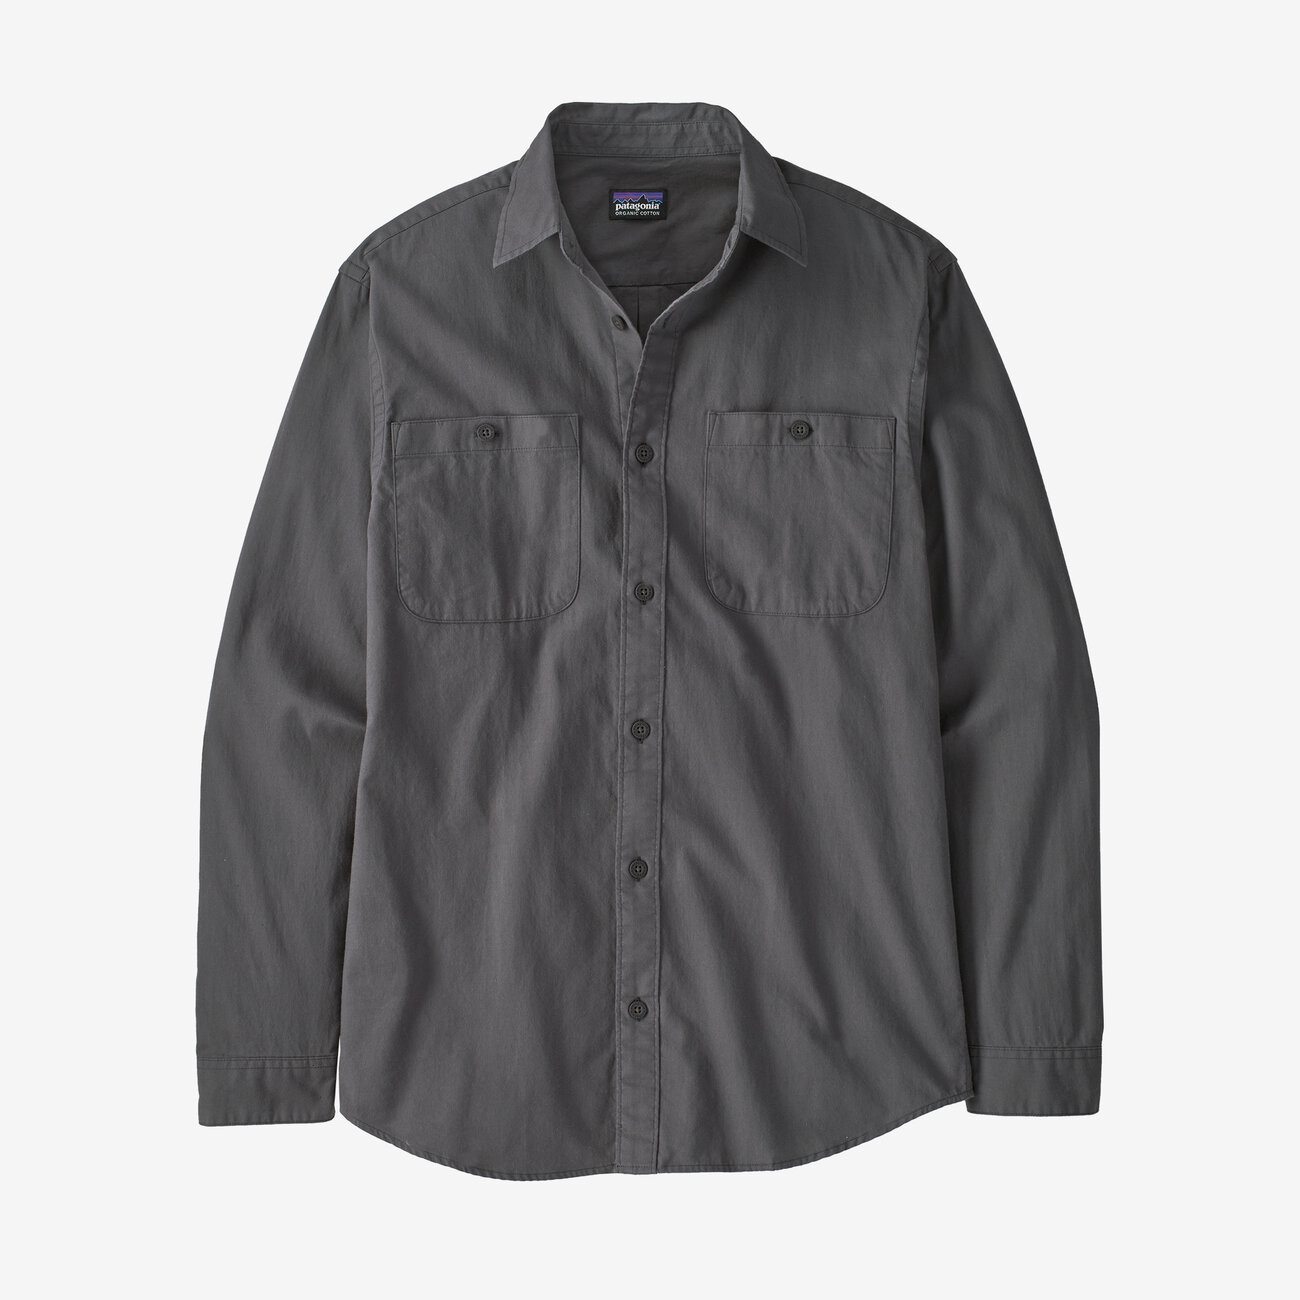 Patagonia M's L/S Pima Cotton Shirt - Forge Grey - Medium